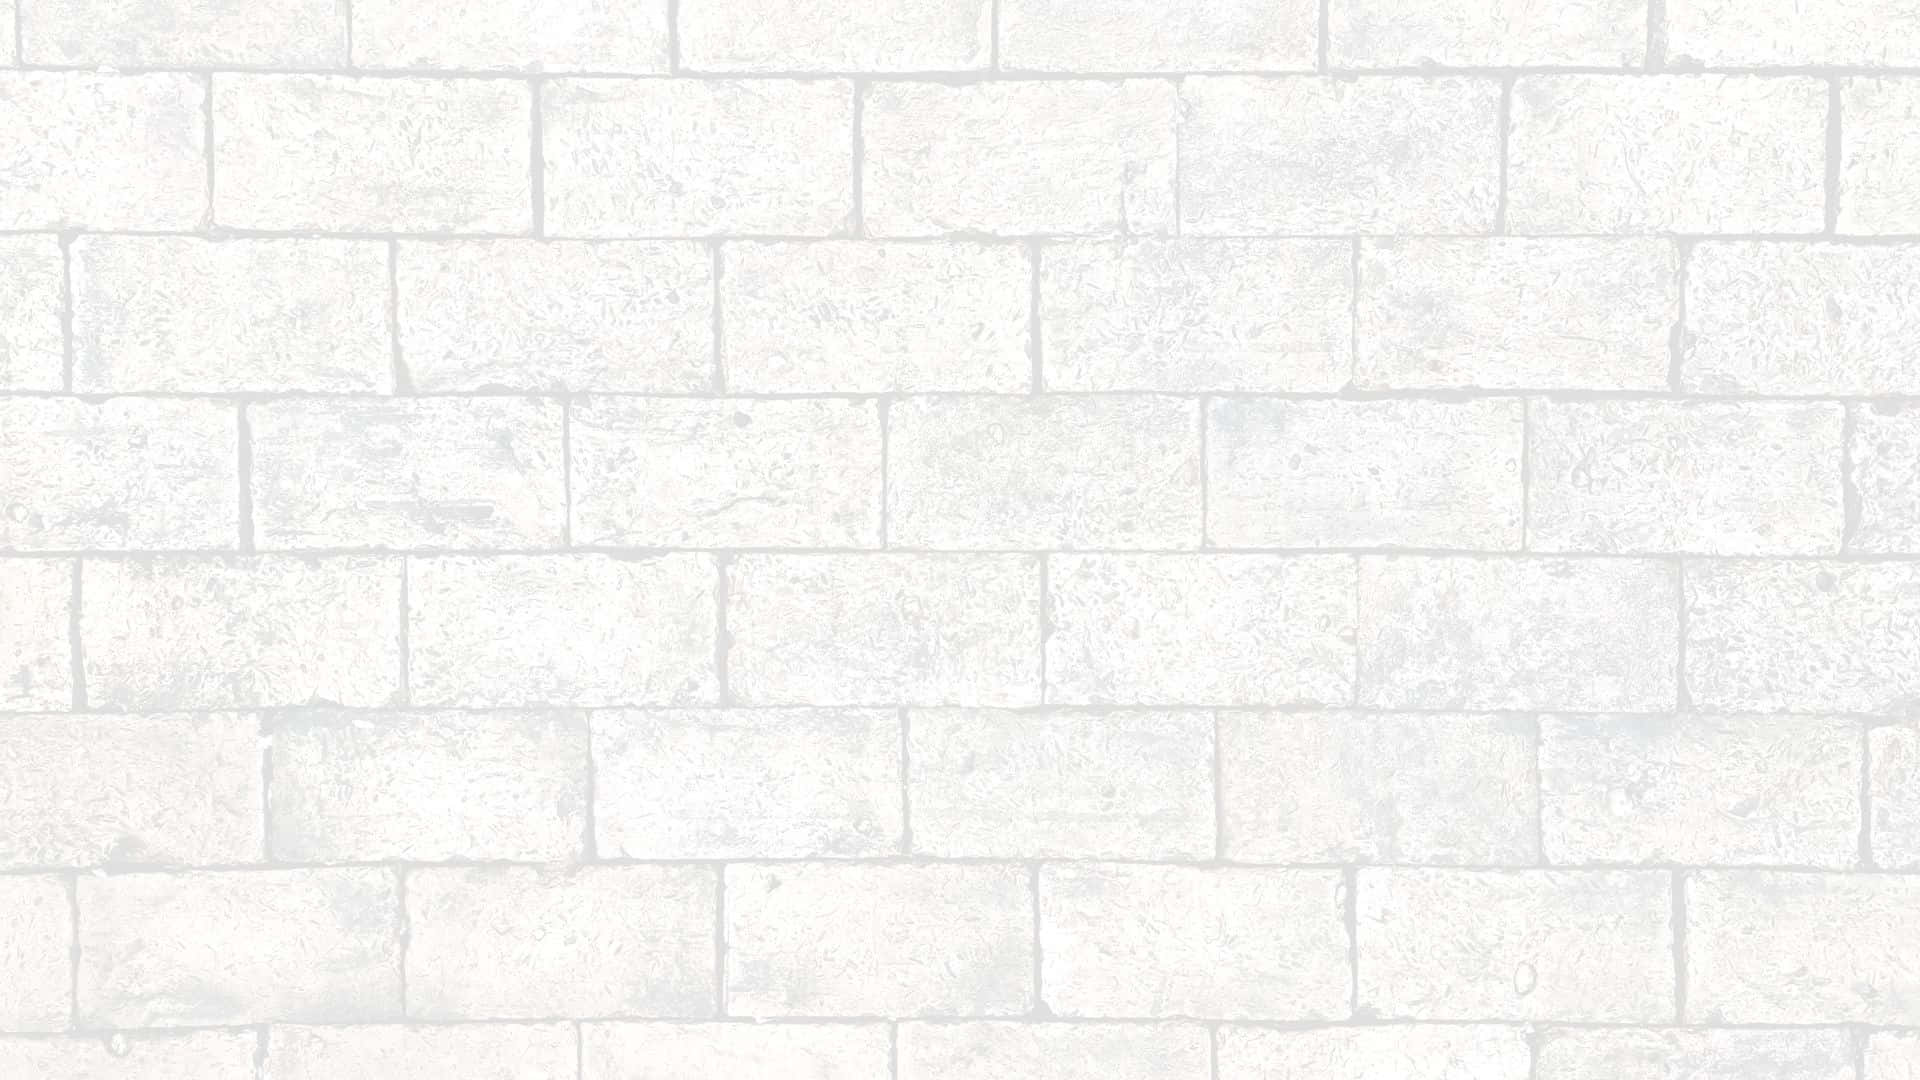 A White Brick Wall Background